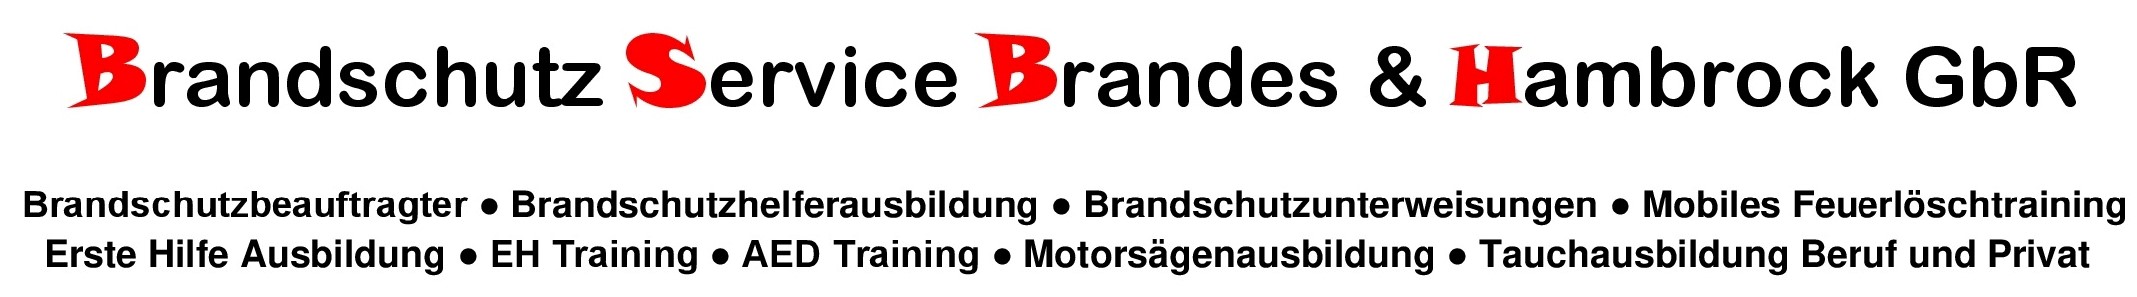 Brandschutz Service Brandes & Hambrock Logo